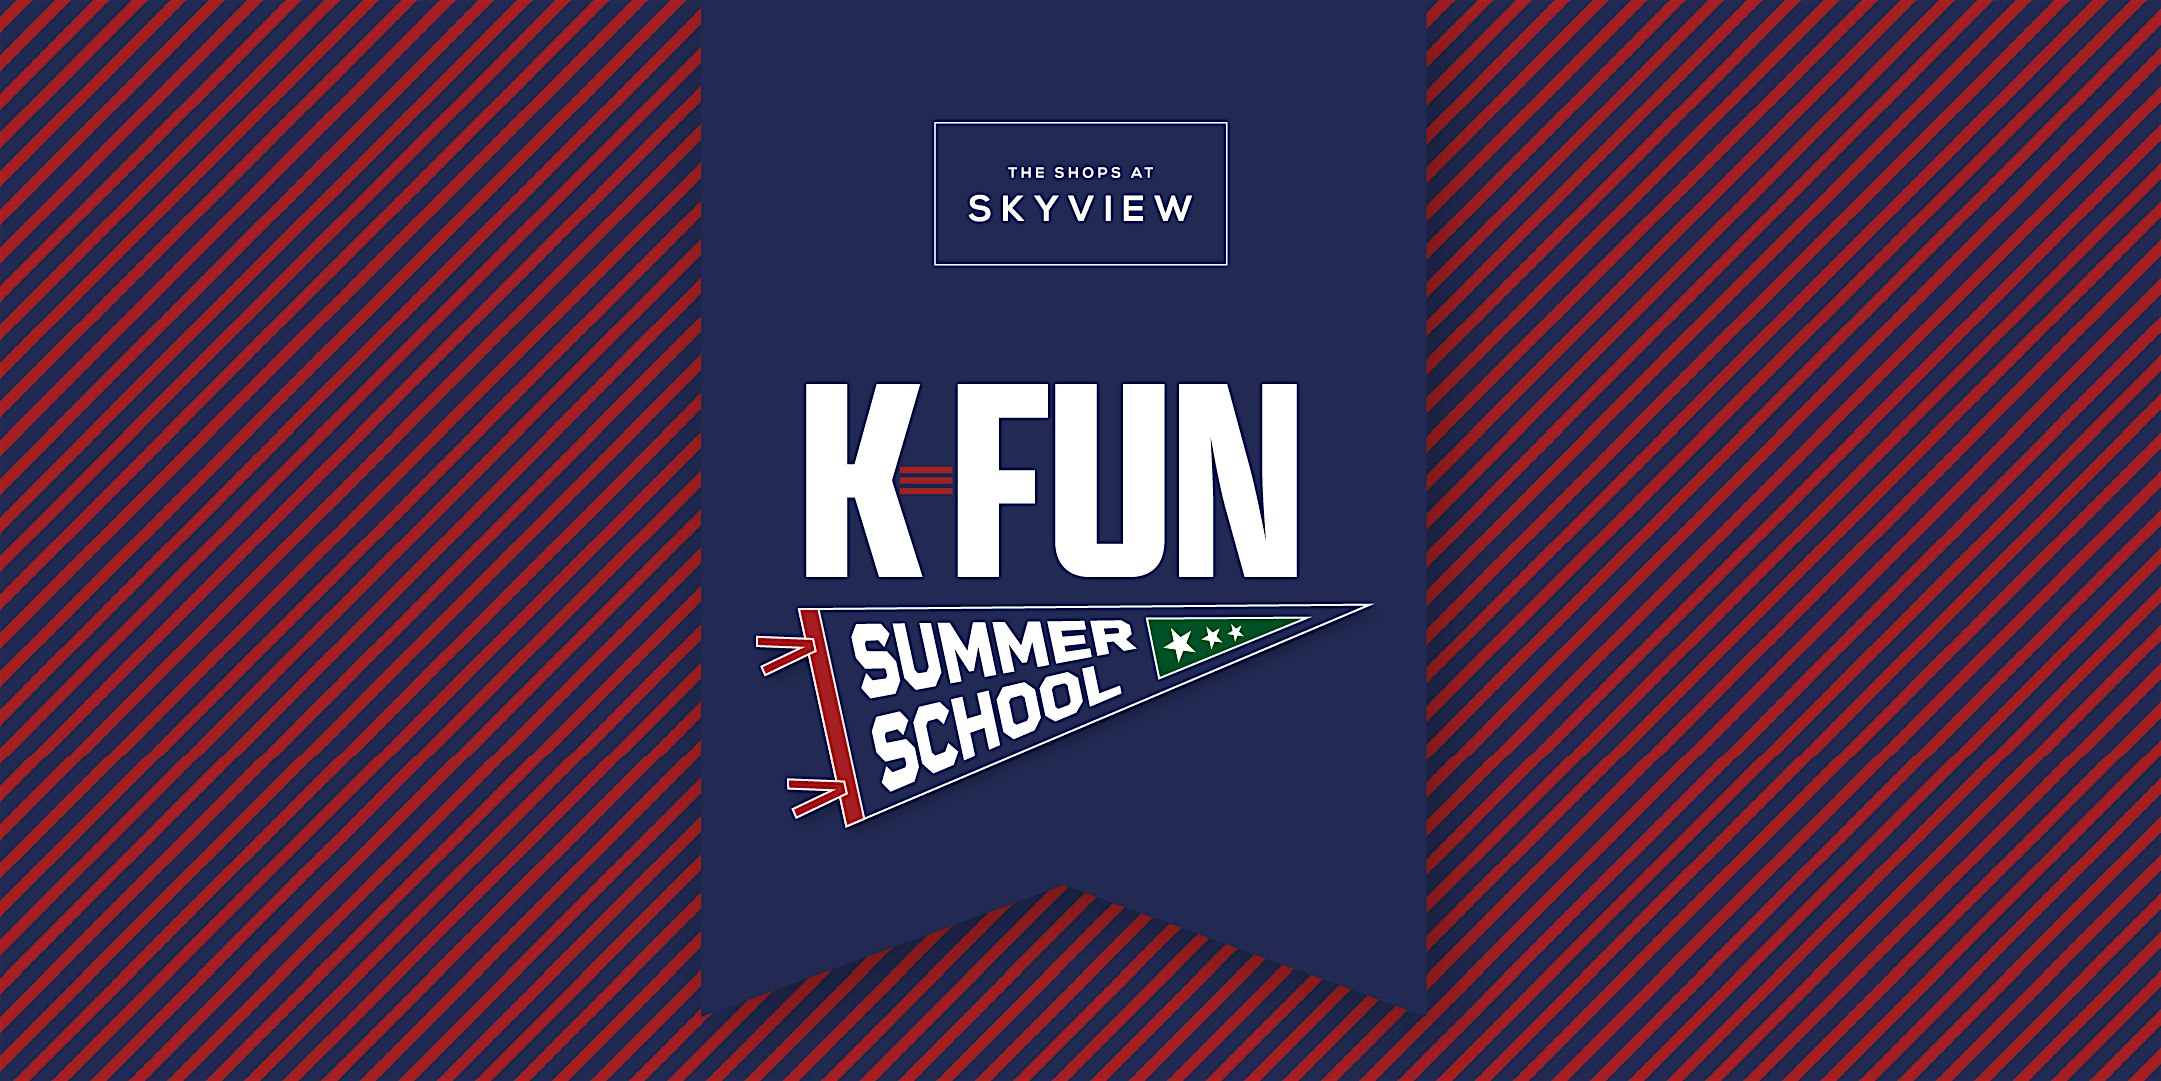 Skyview "K-FUN" Summer School | K-Food Day